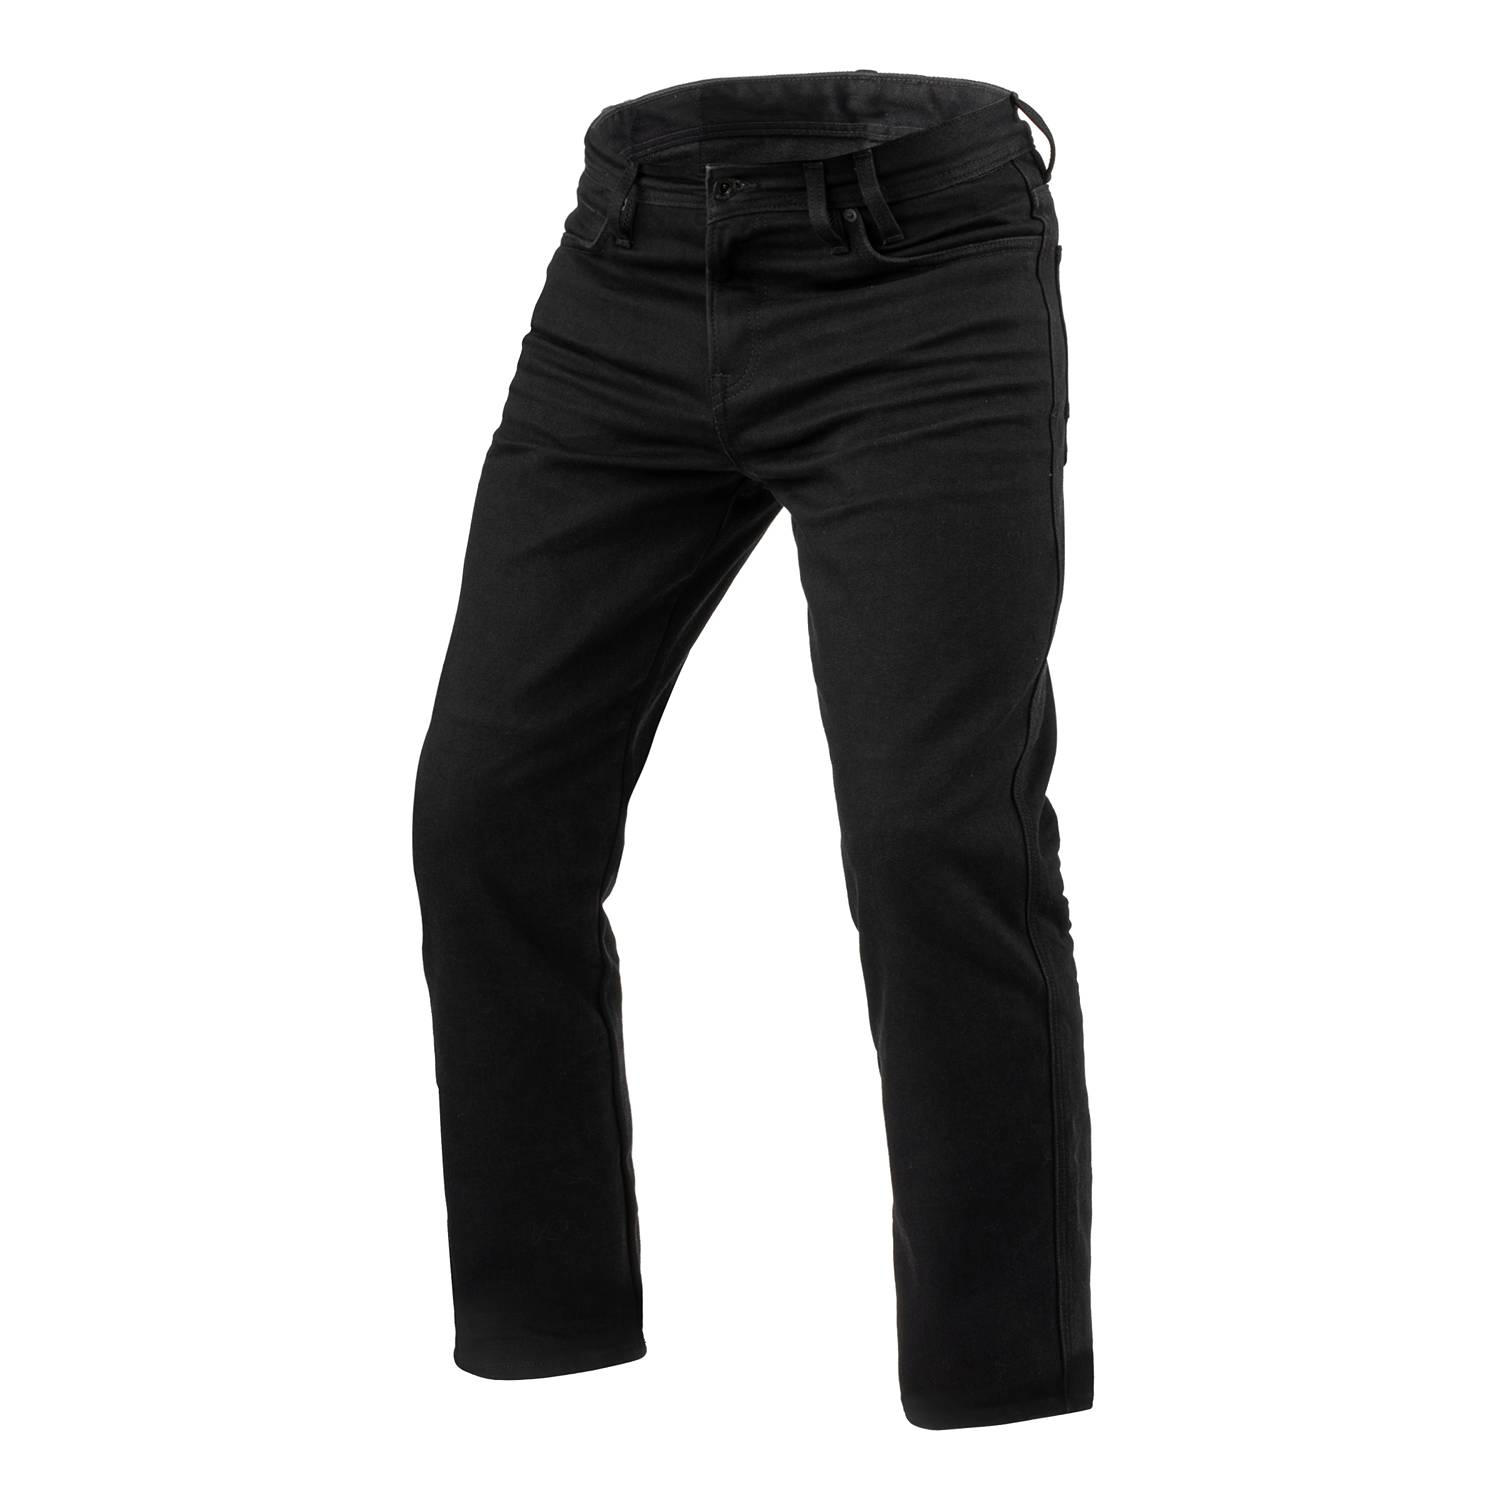 Image of REV'IT! Jeans Lombard 3 RF Black L36 Motorcycle Jeans Talla L36/W38